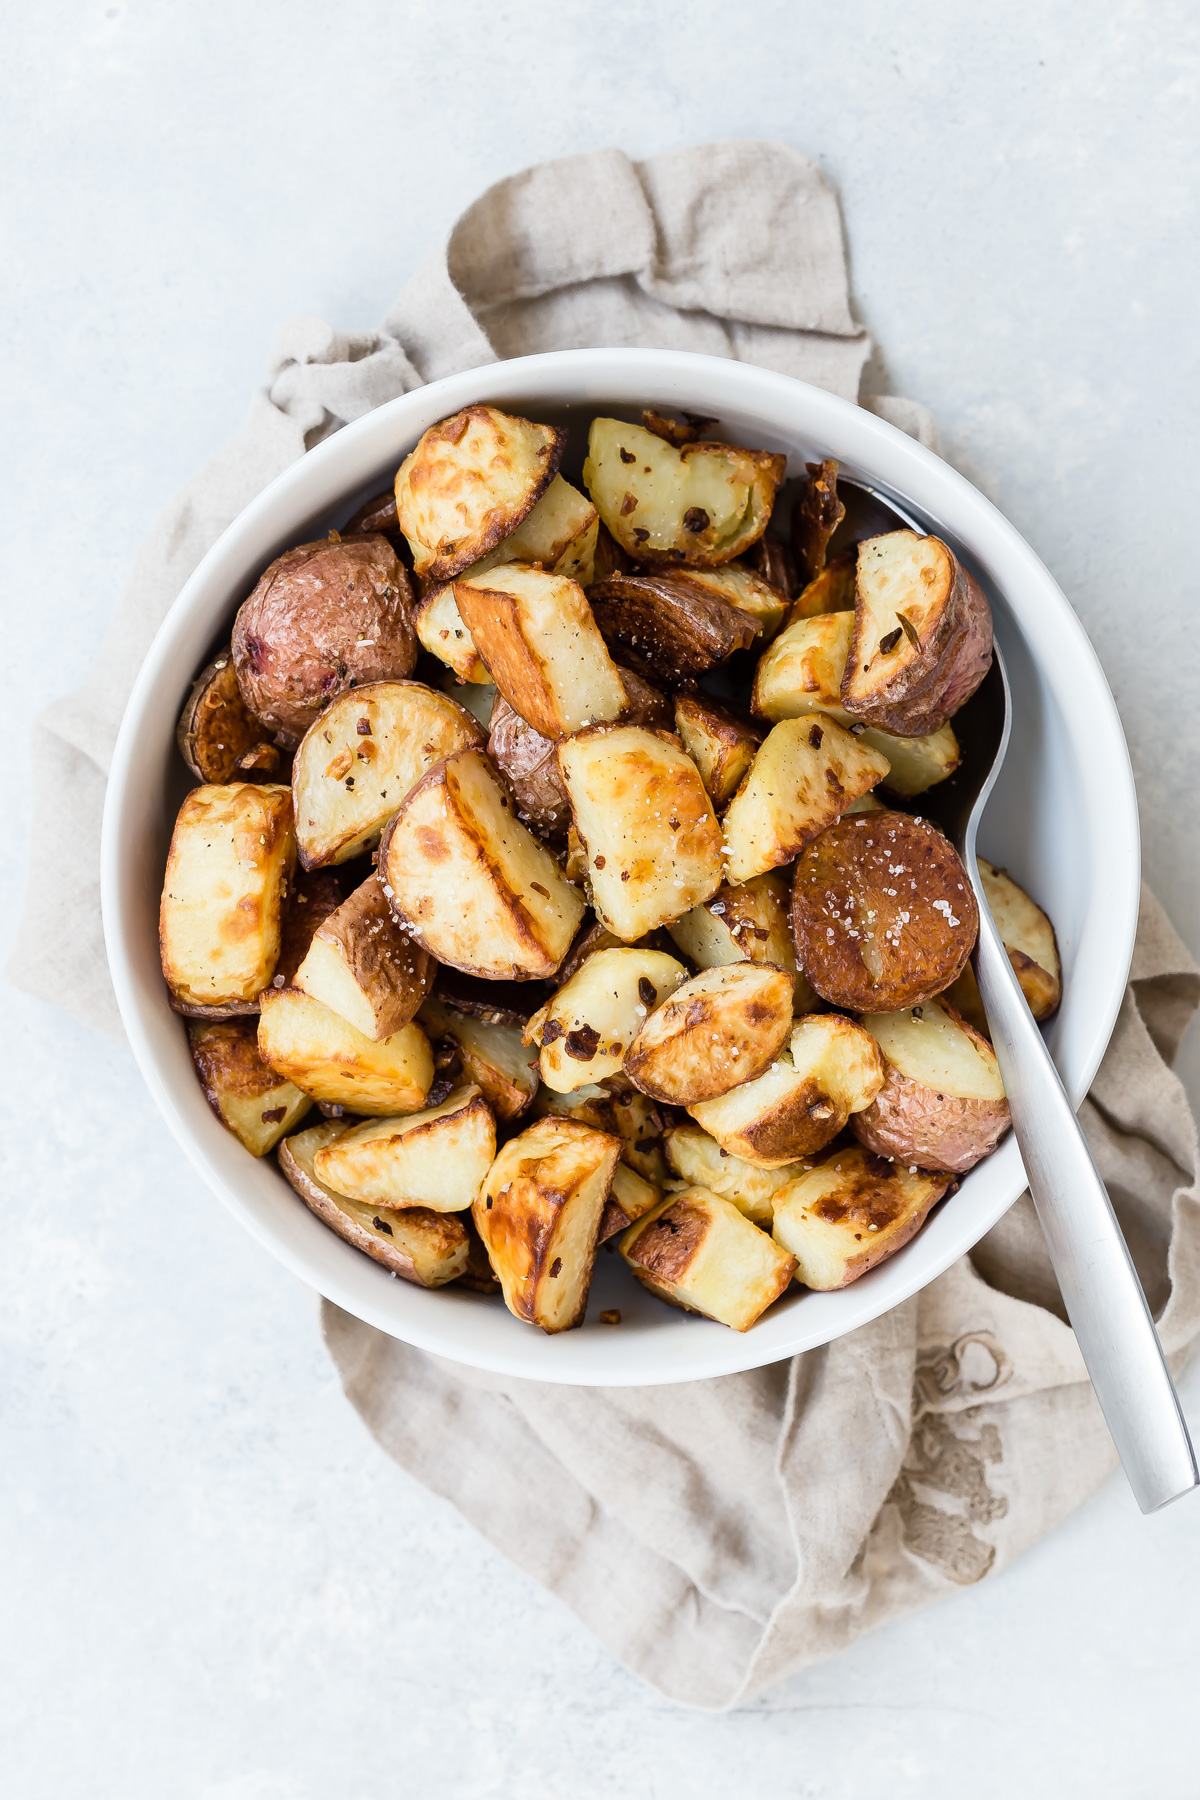 Garlic Roast Red Potatoes recipe from Weelicious.com